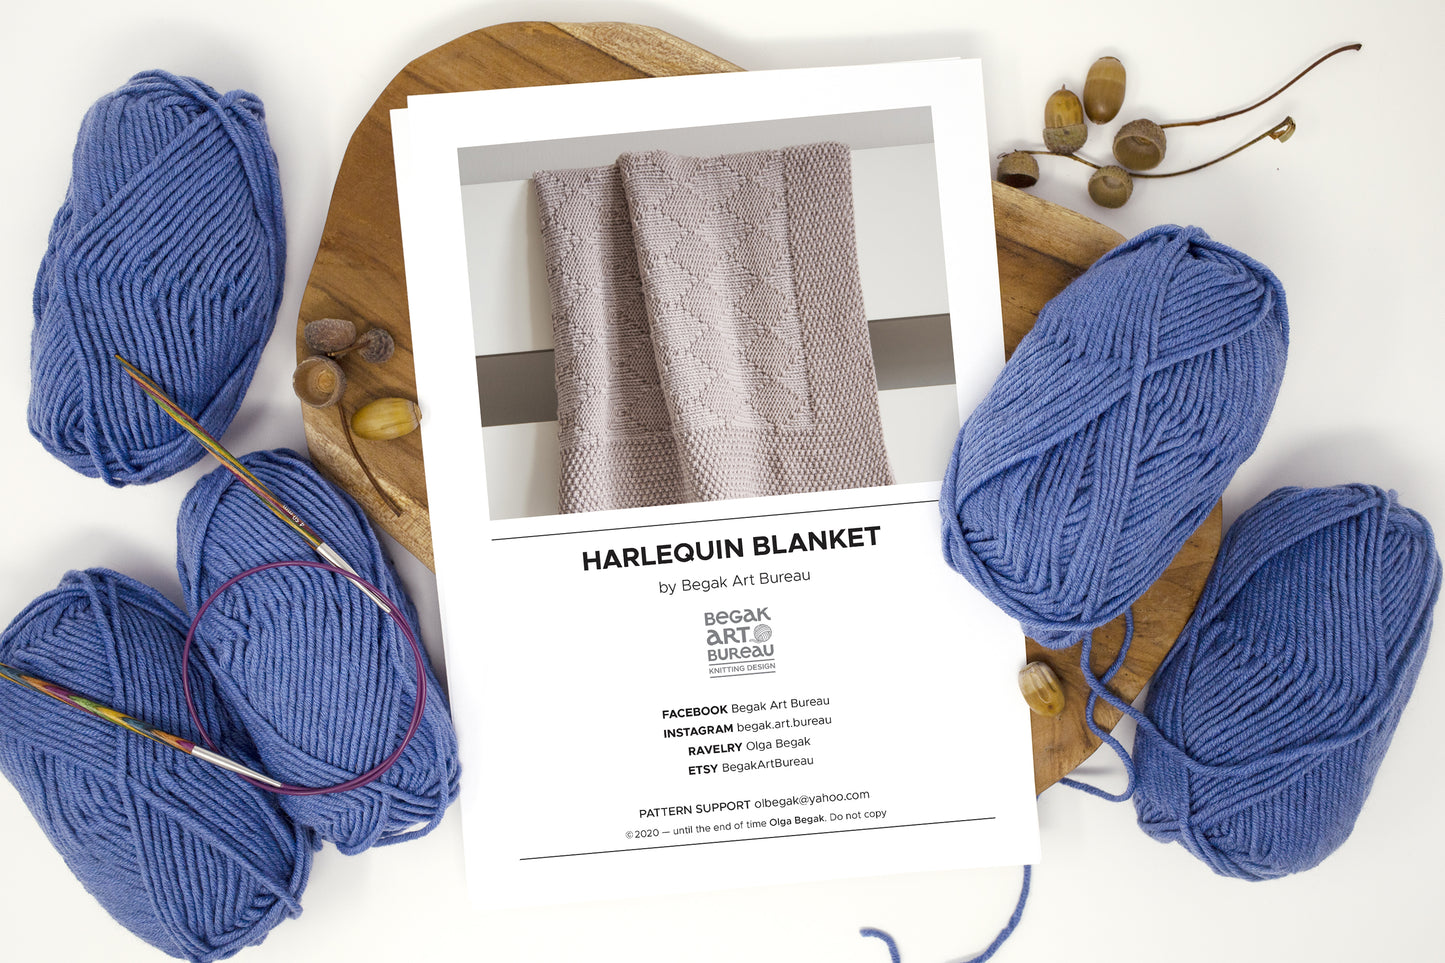 Harlequin baby blanket knitting pattern and blue yarn balls